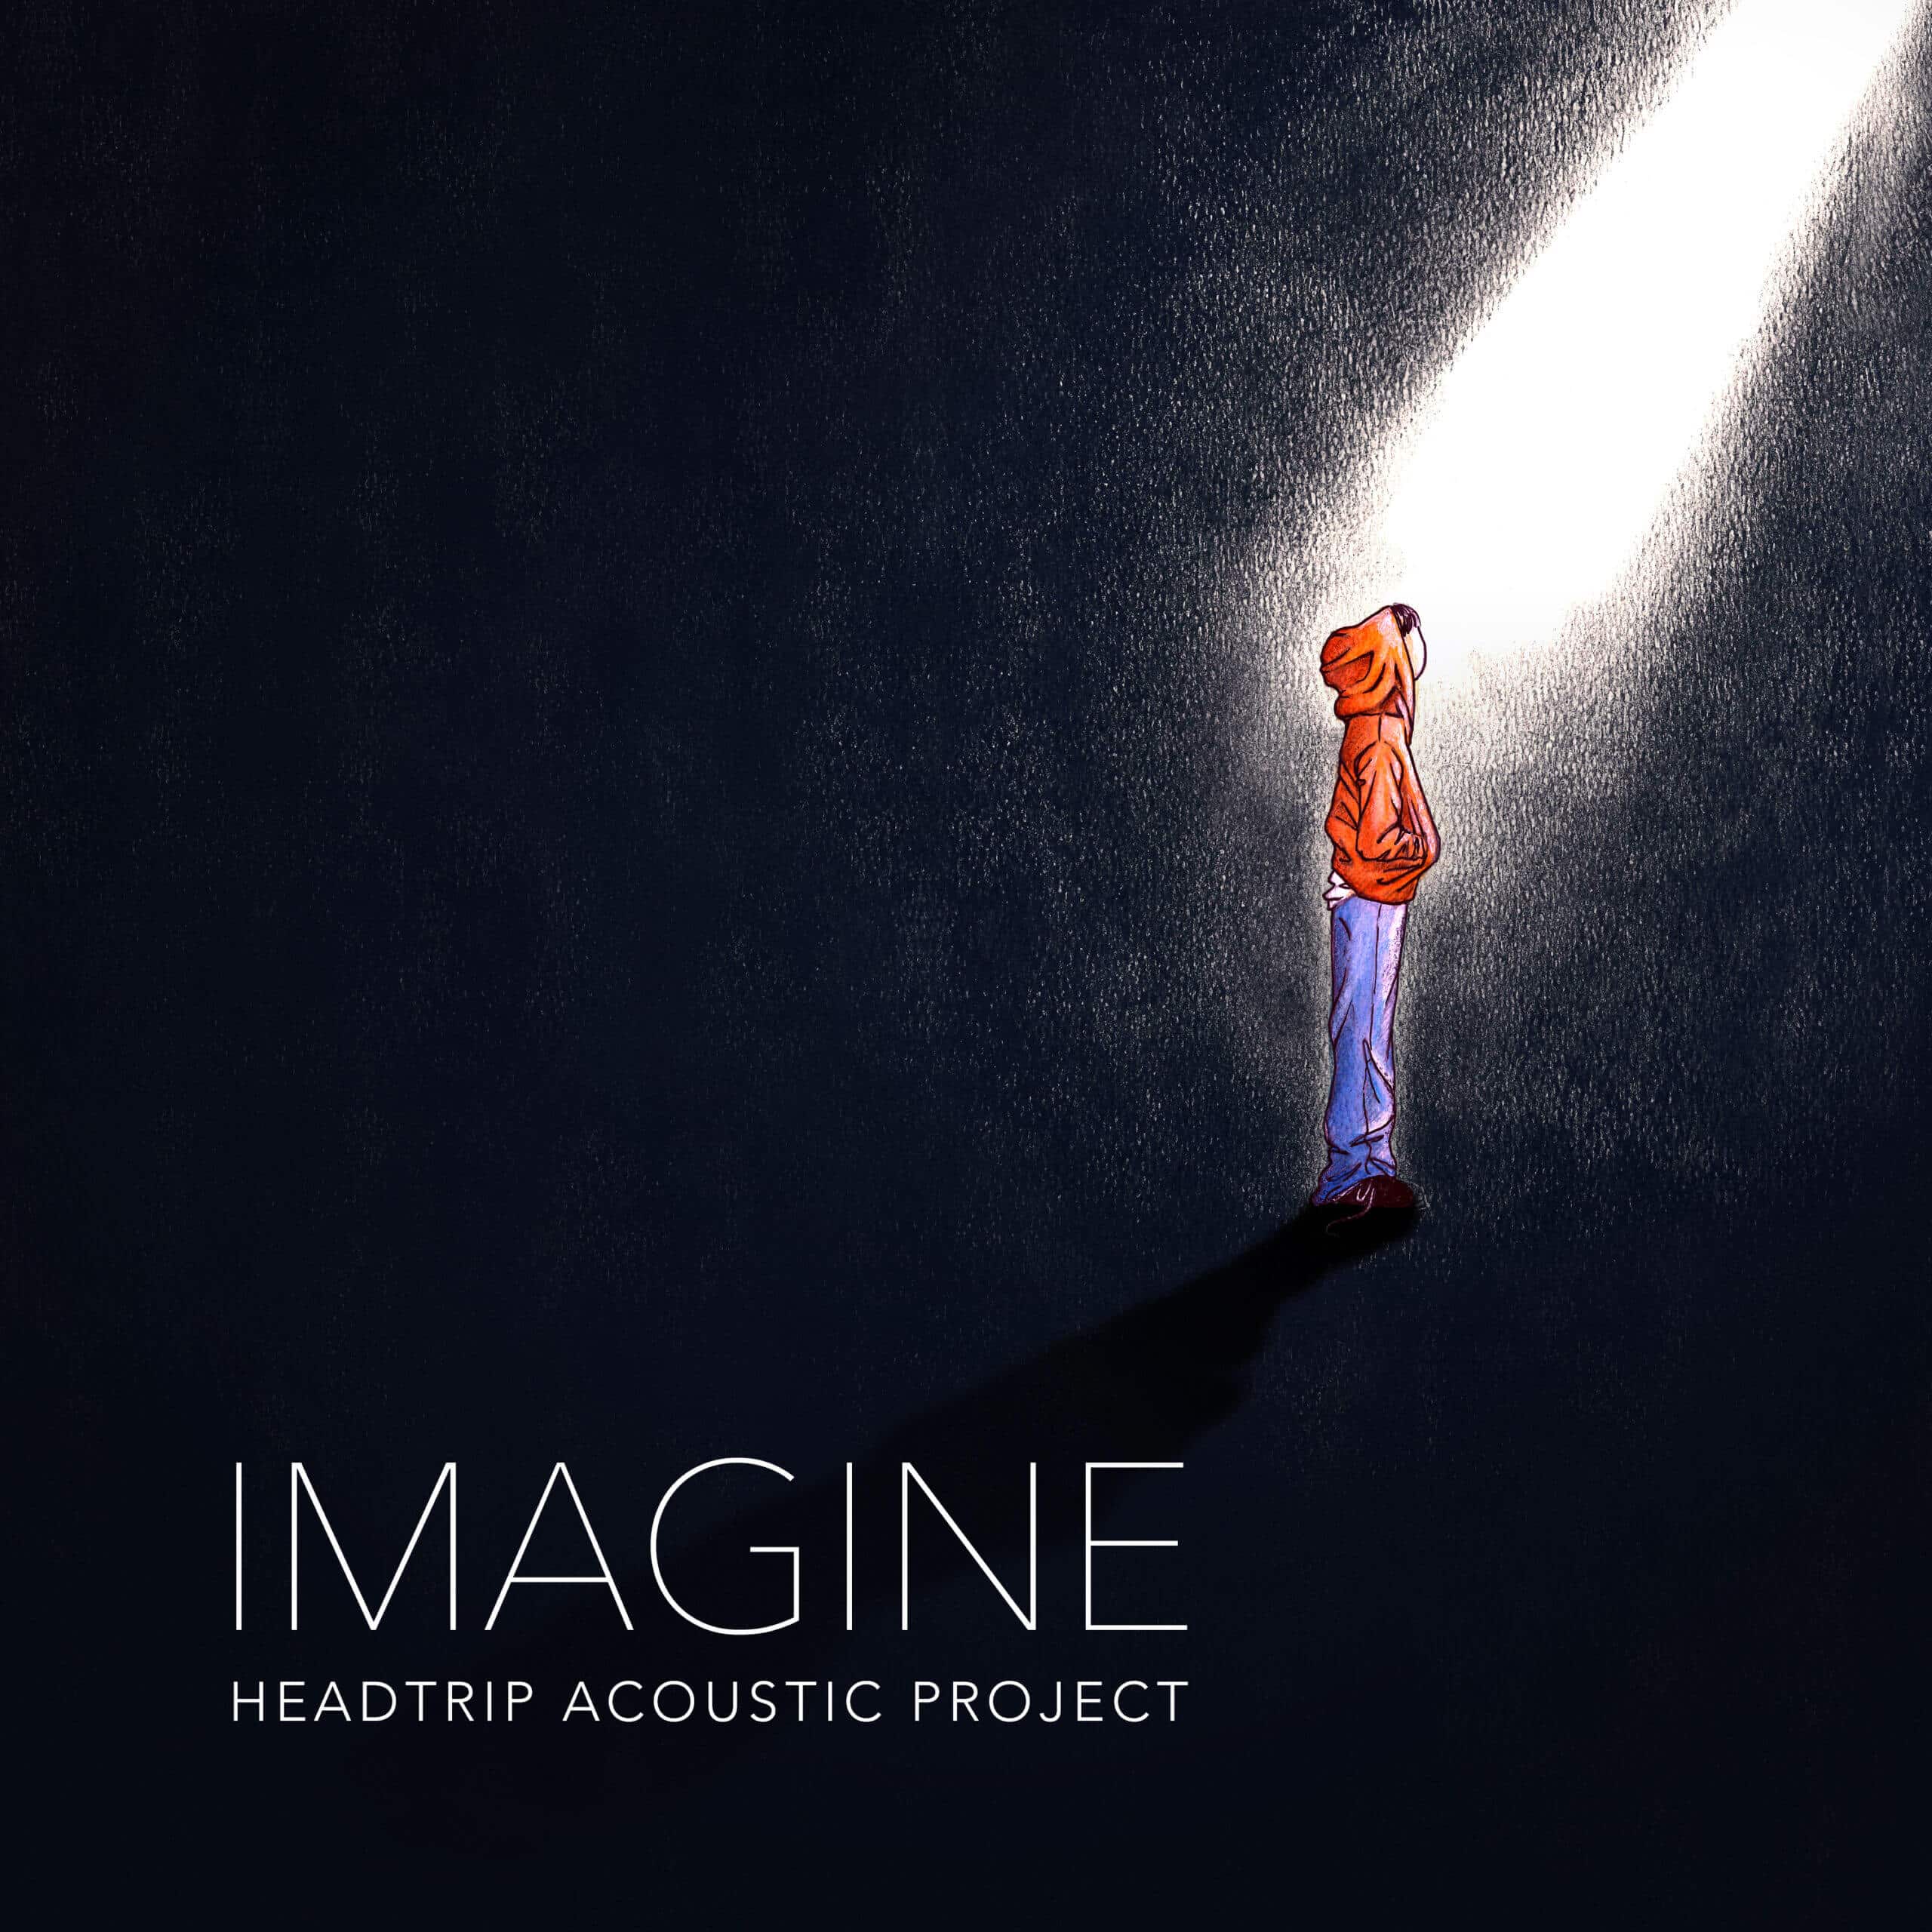 Headtrip Acoustic Project - Imagine Single Cover